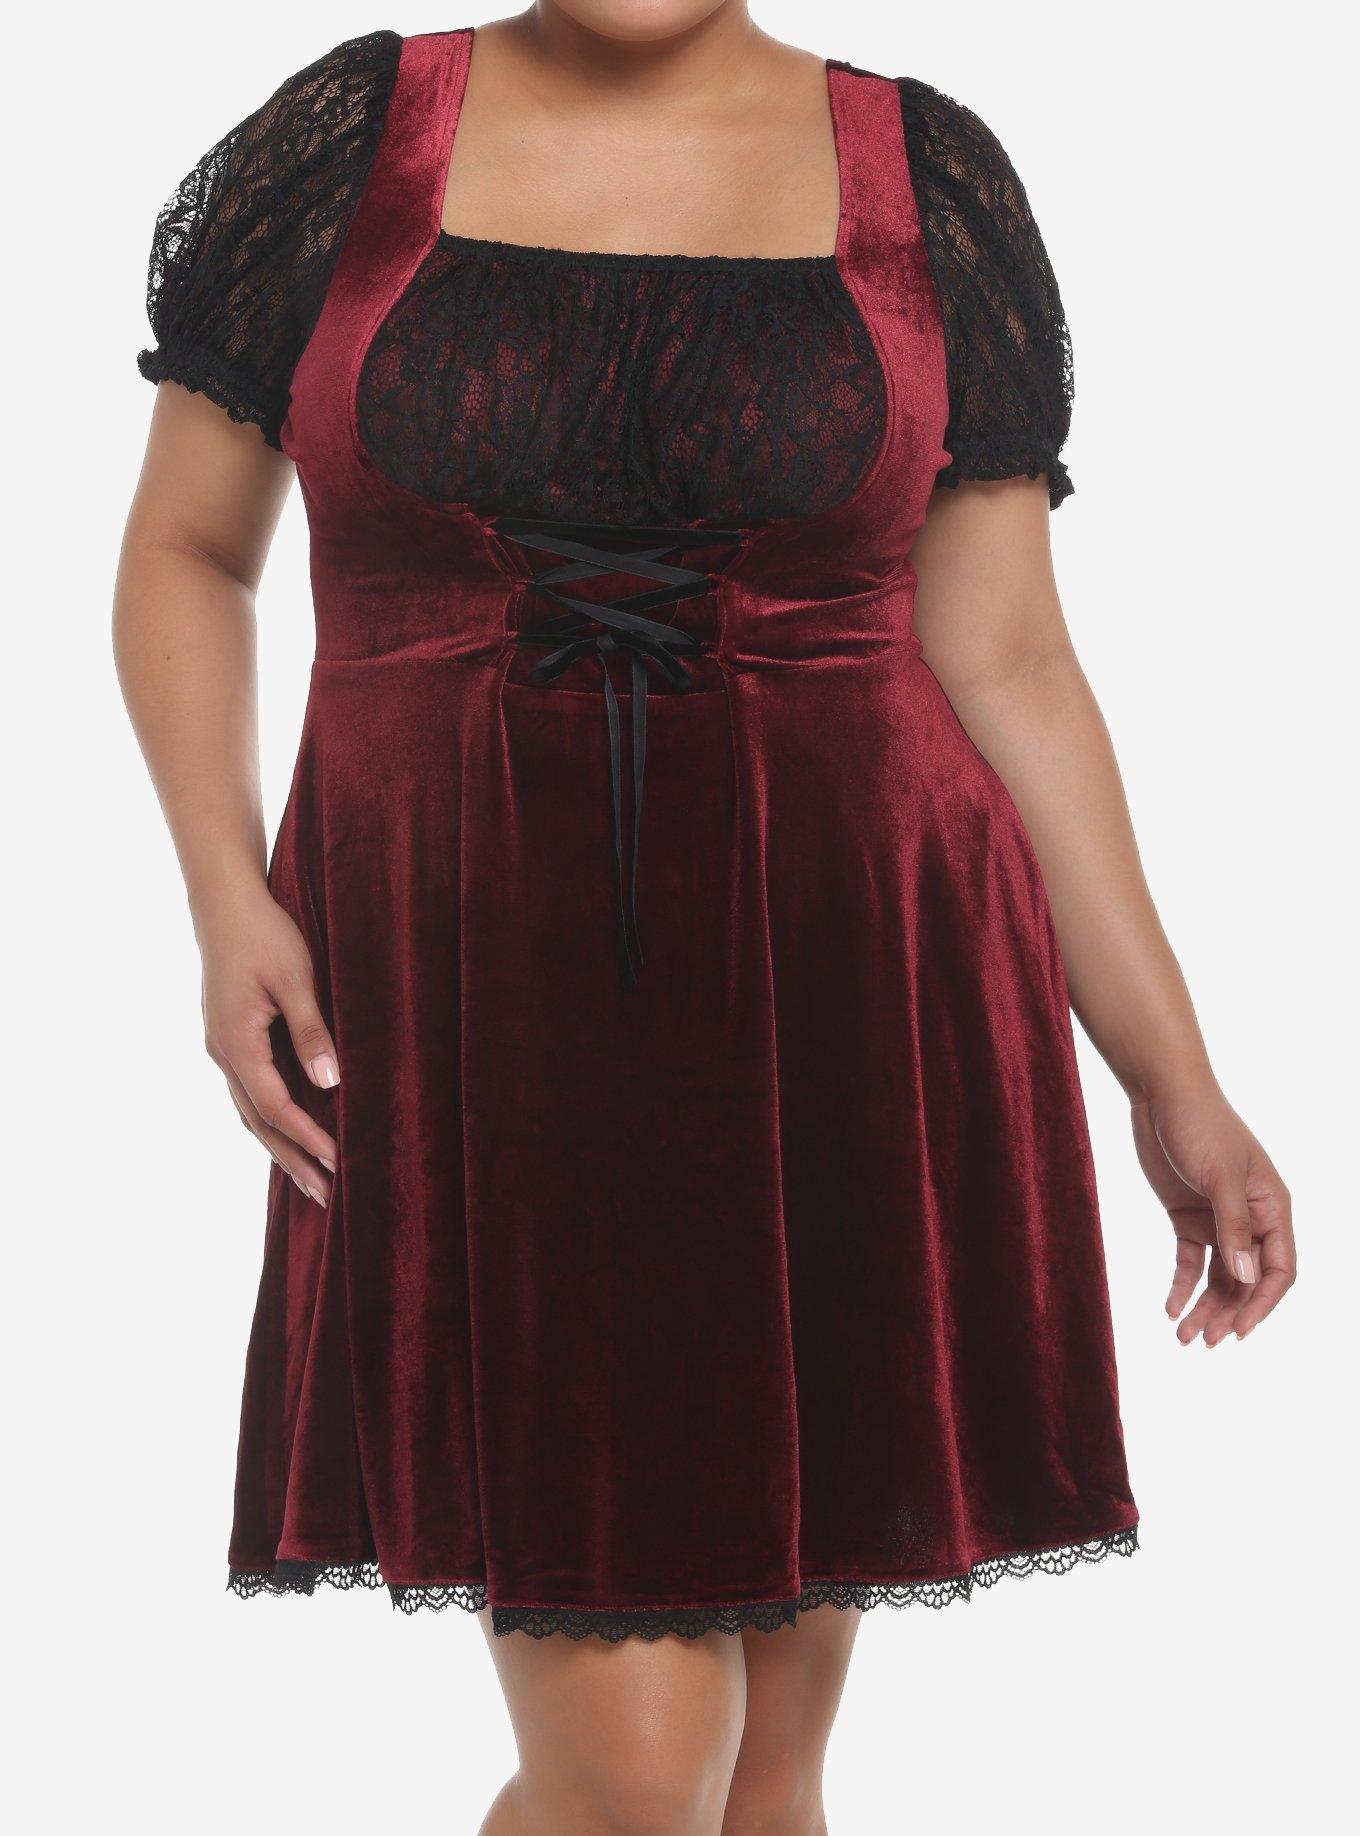 Burgundy Velvet & Black Lace Corset Dress Plus Size